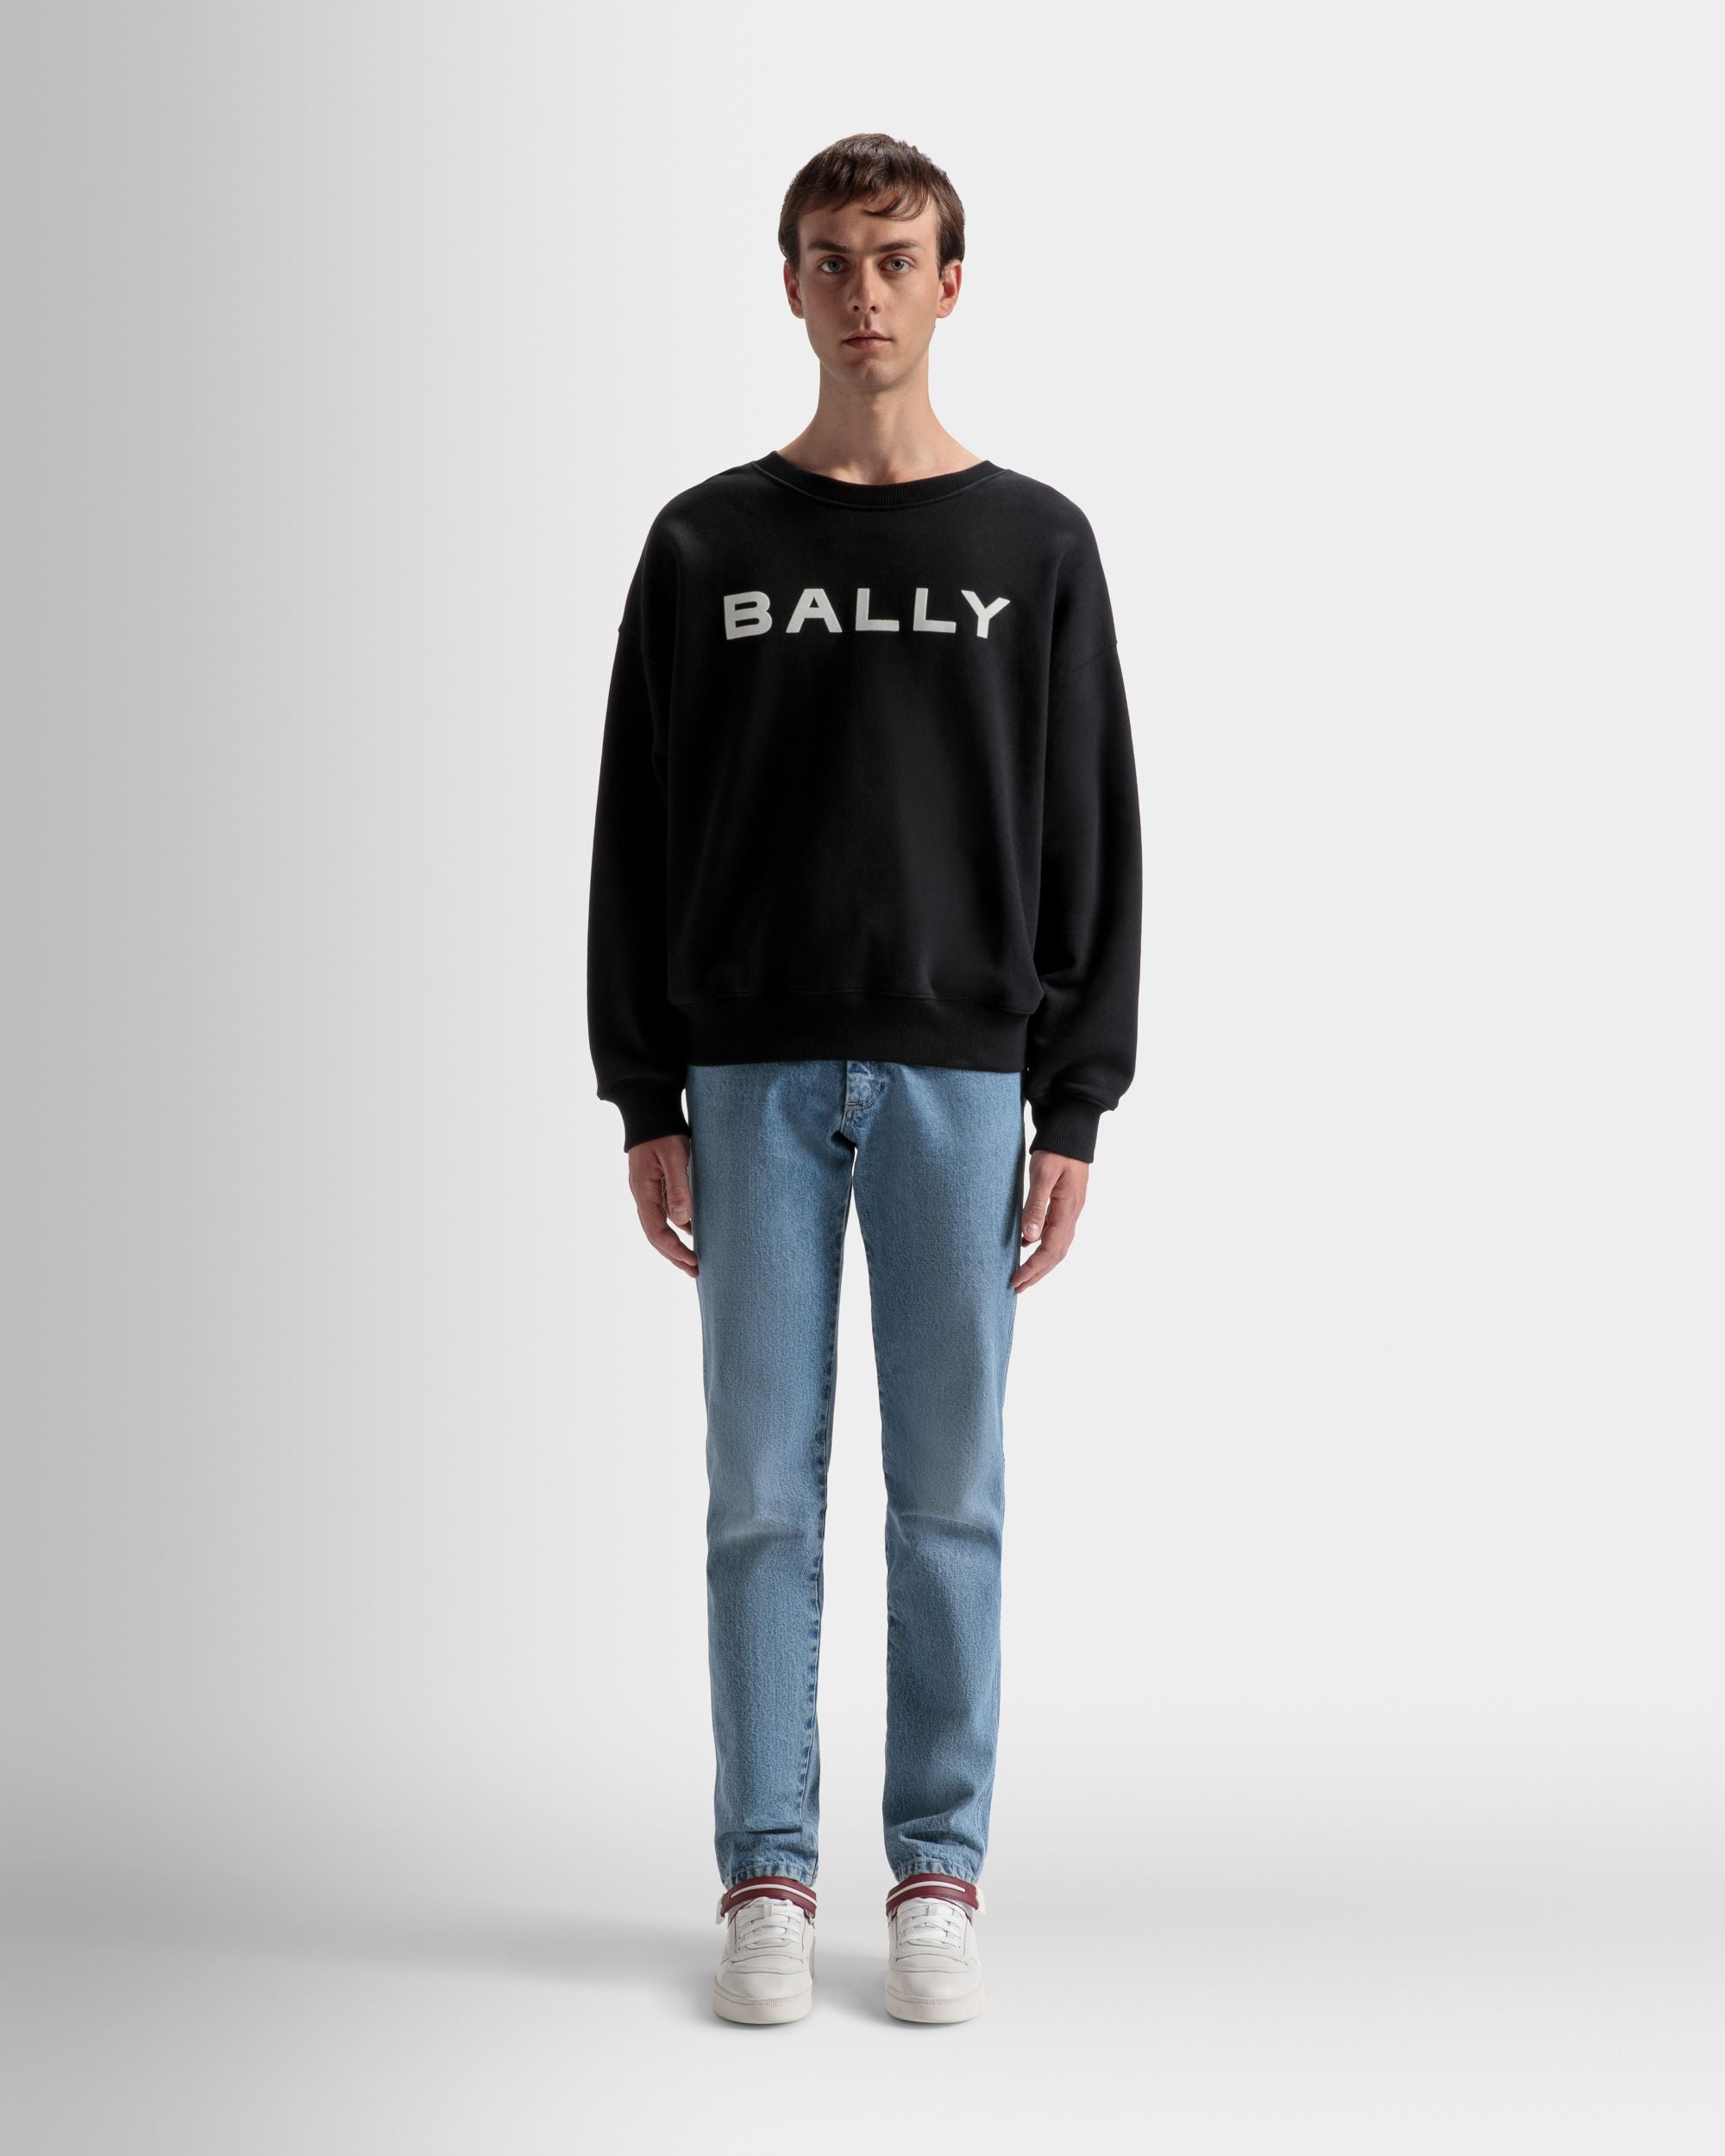 Logo Sweatshirt | Men's Sweatshirt | Black Cotton | Bally | On Model Front